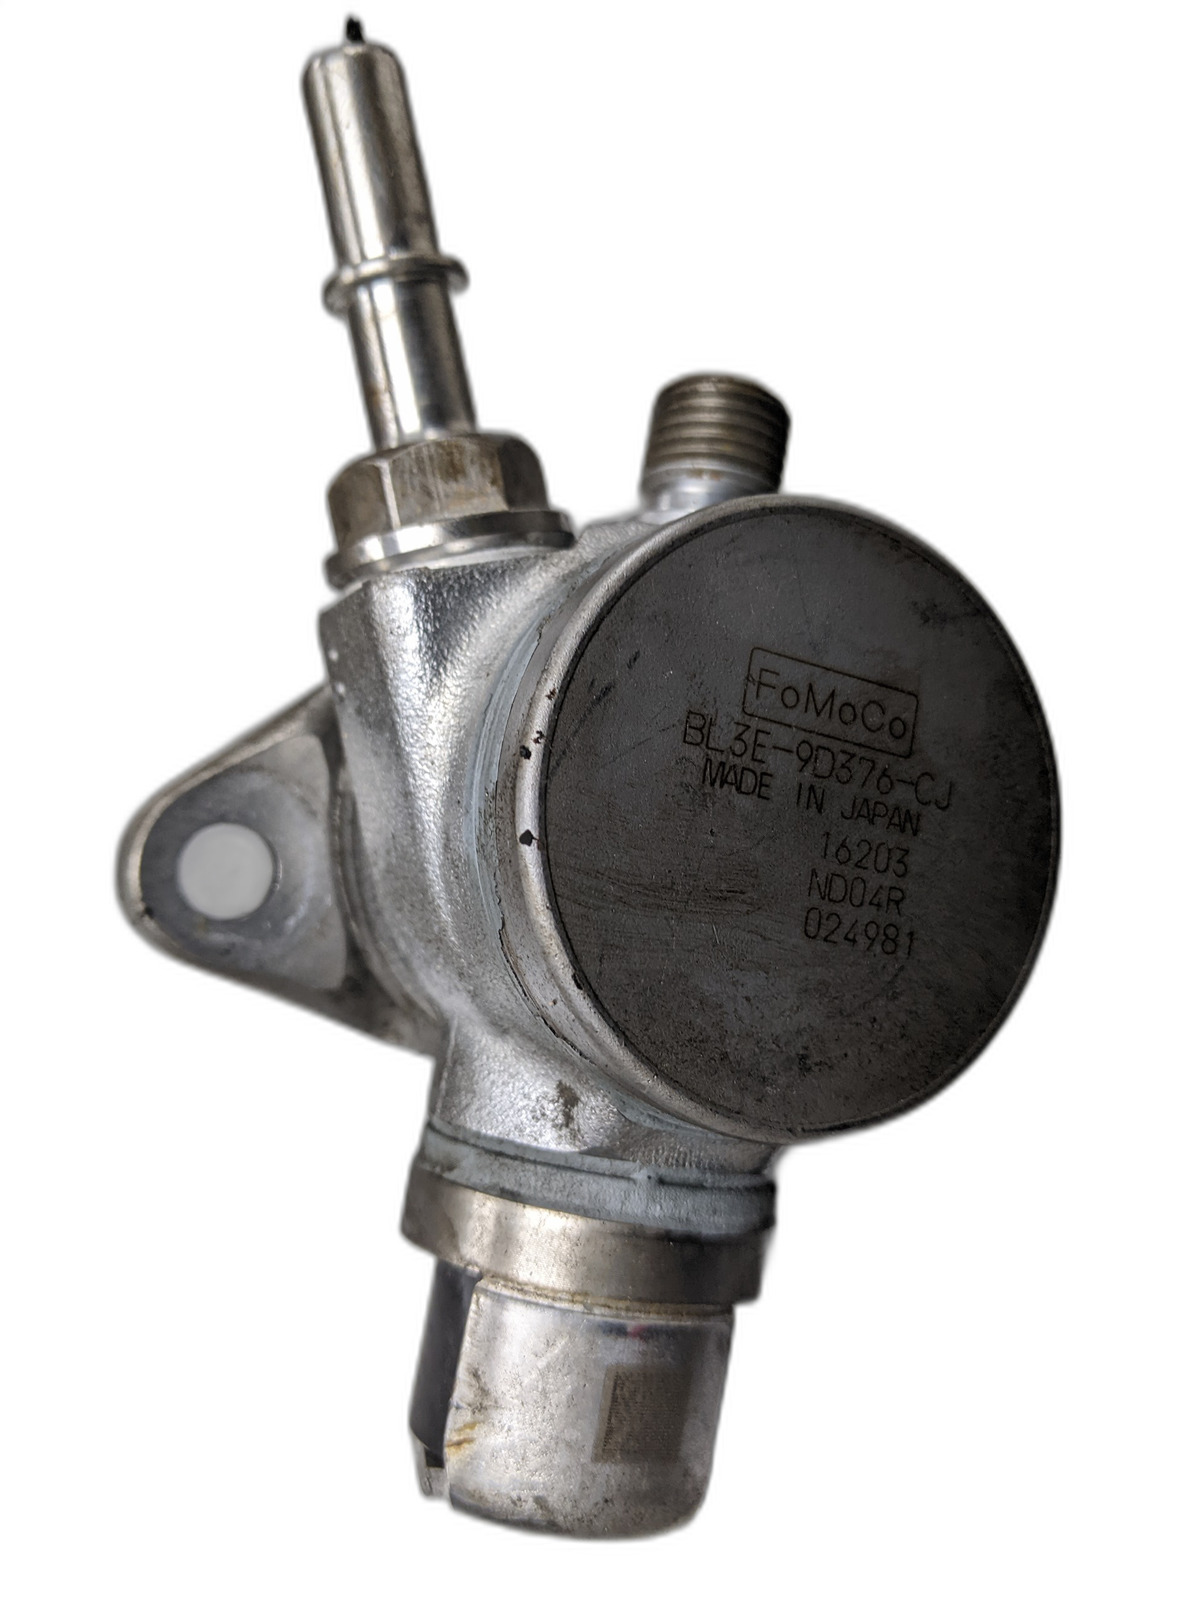 High Pressure Fuel Pump From 2016 Lincoln Navigator  3.5 BL3E9D376CJ - $59.95